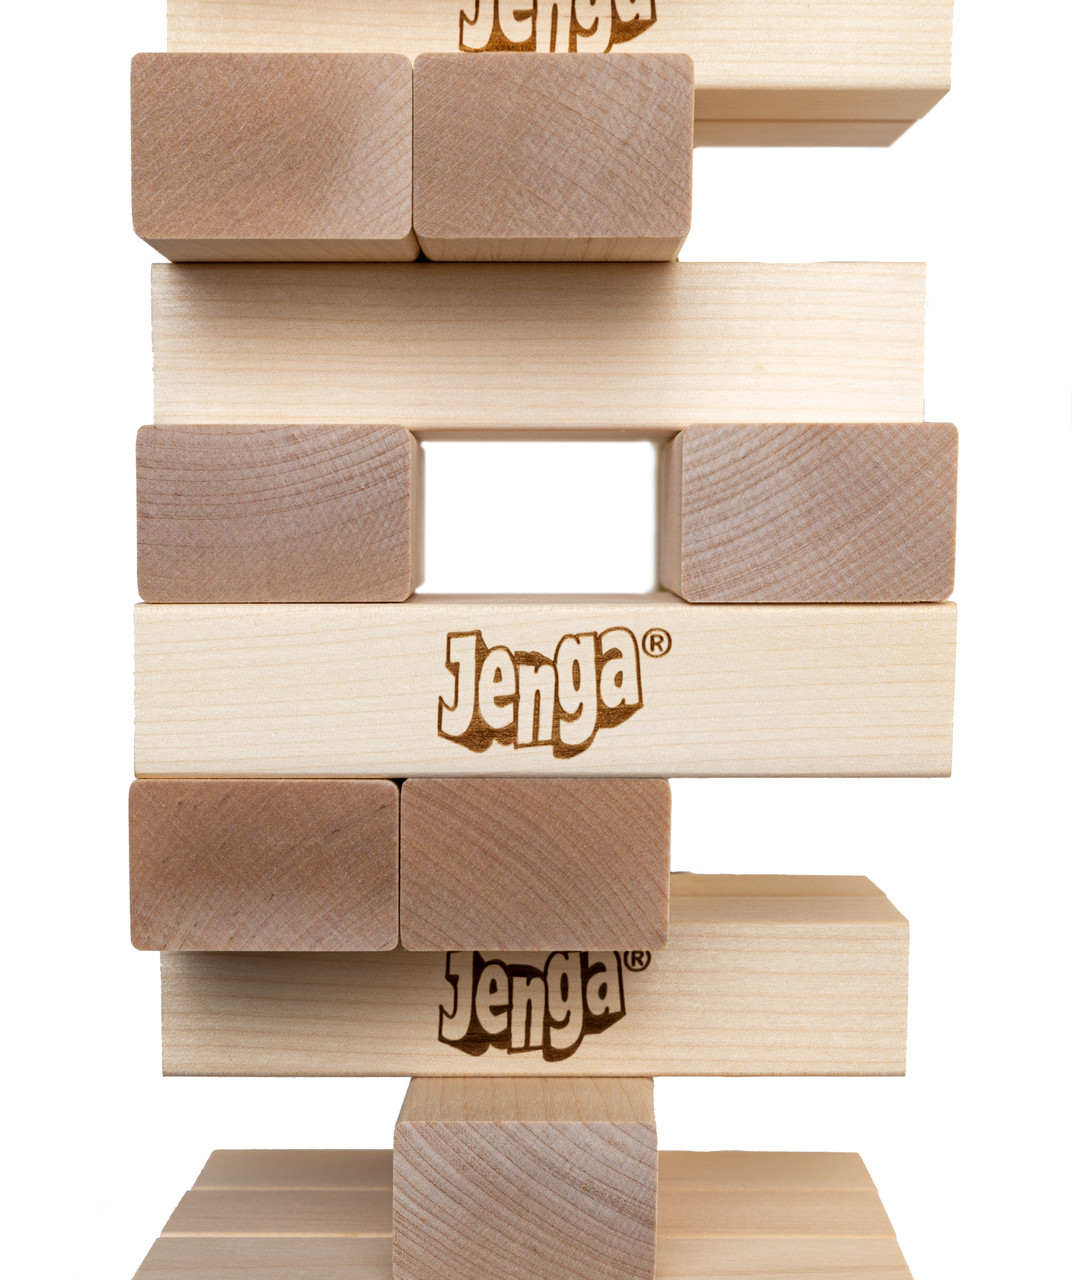 Classic Jenga Game with Genuine Hardwood Blocks, Jenga Brand